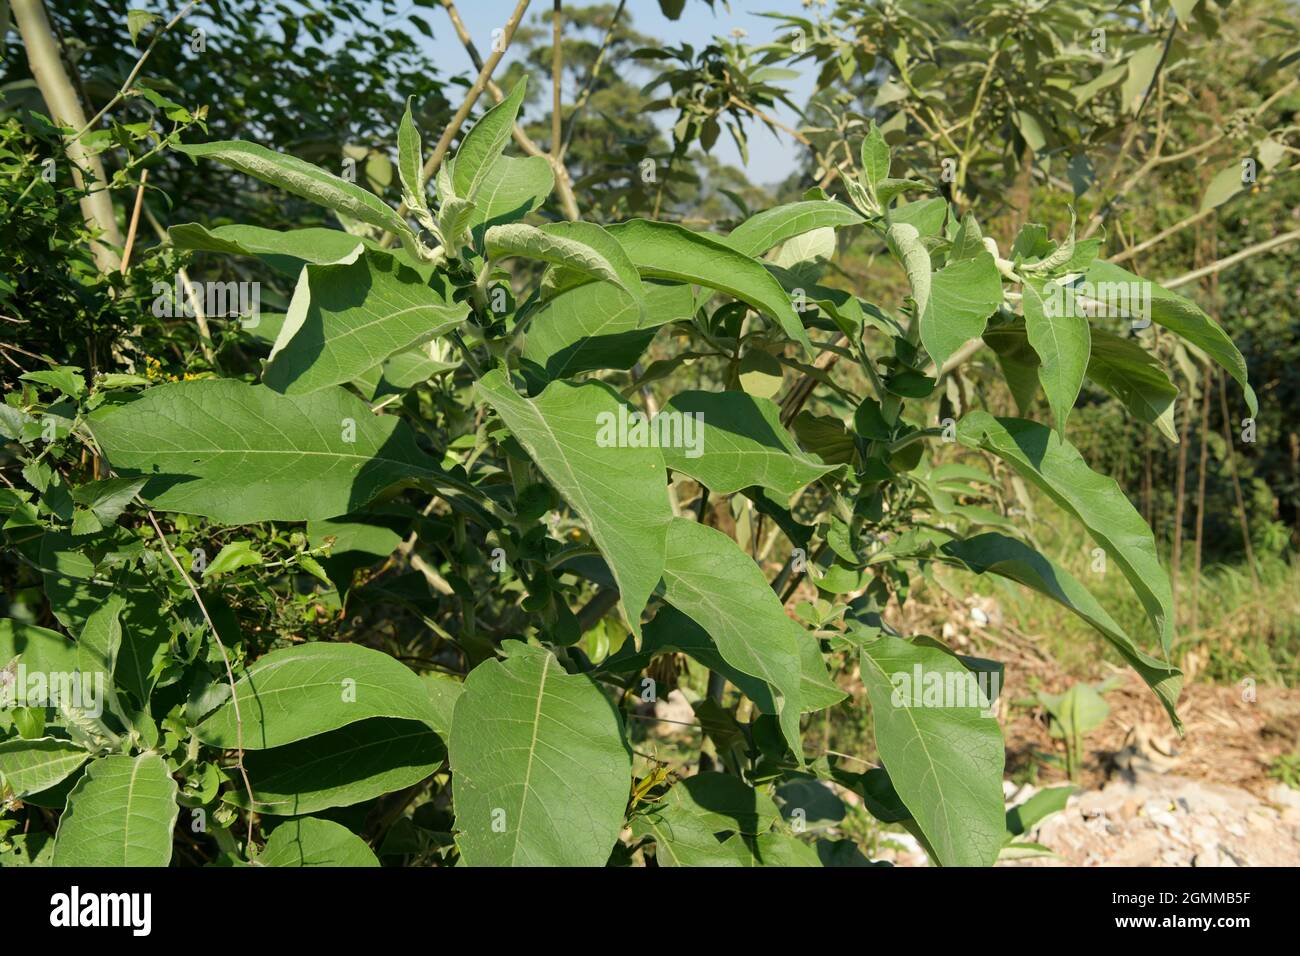 Exotic alien invasive plant, Solanum mauritianum, Earleaf Nightshade, Flannel weed, Bug weed, growing wild KwaZulu-Natal, South Africa, illustration Stock Photo